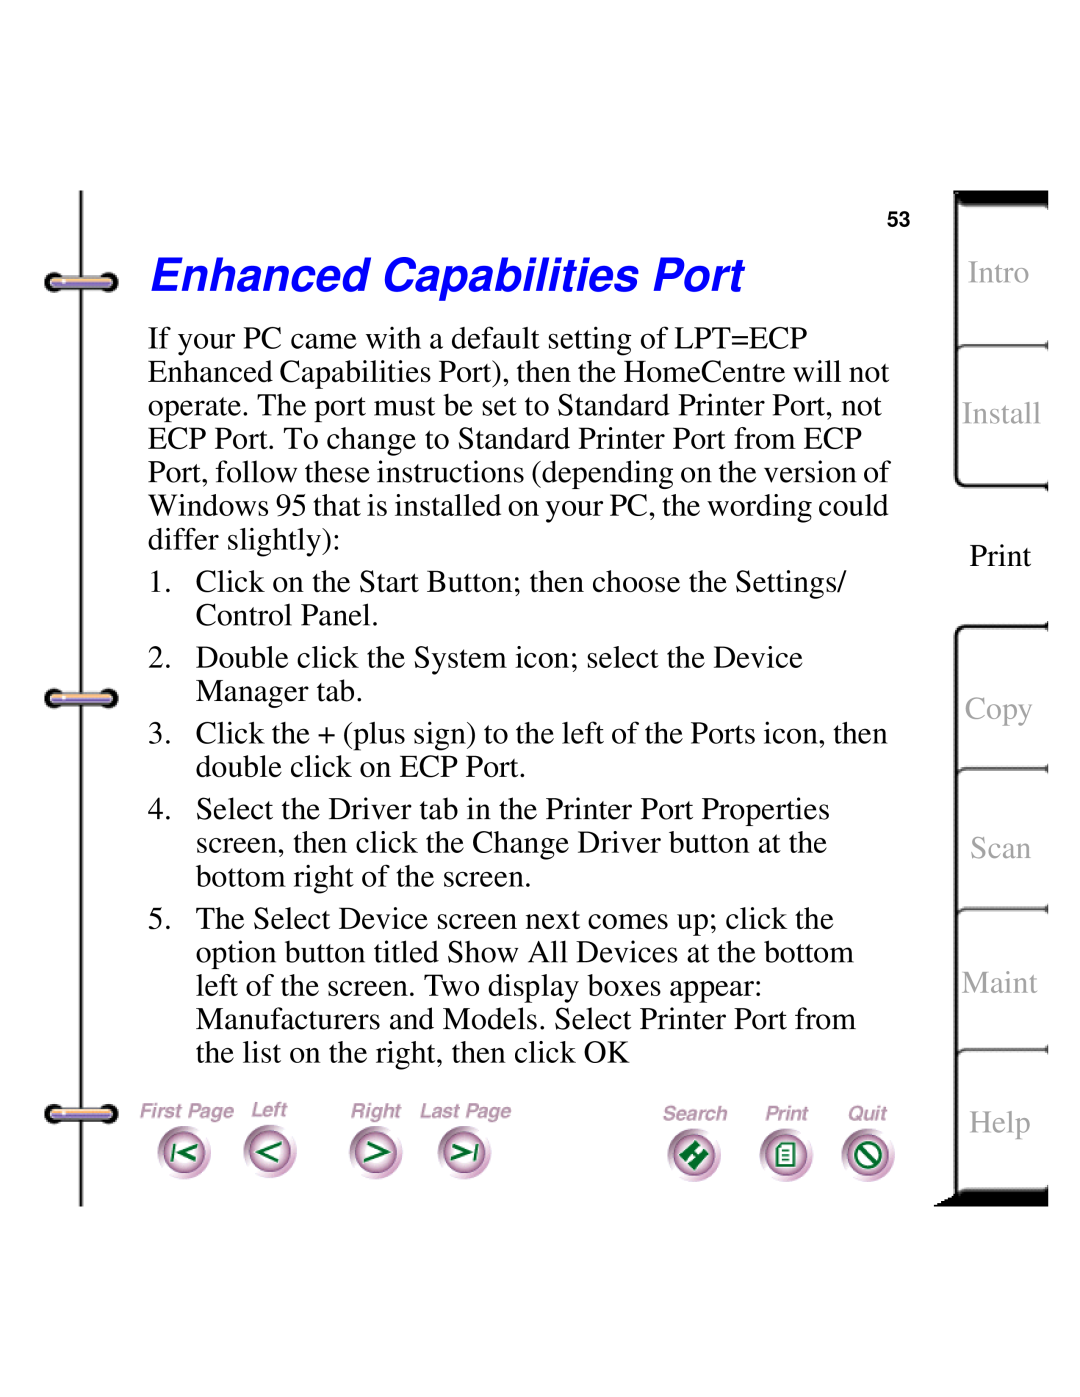 Xerox Document HomeCentre manual Enhanced Capabilities Port, Intro Install, Copy Scan Maint Help 